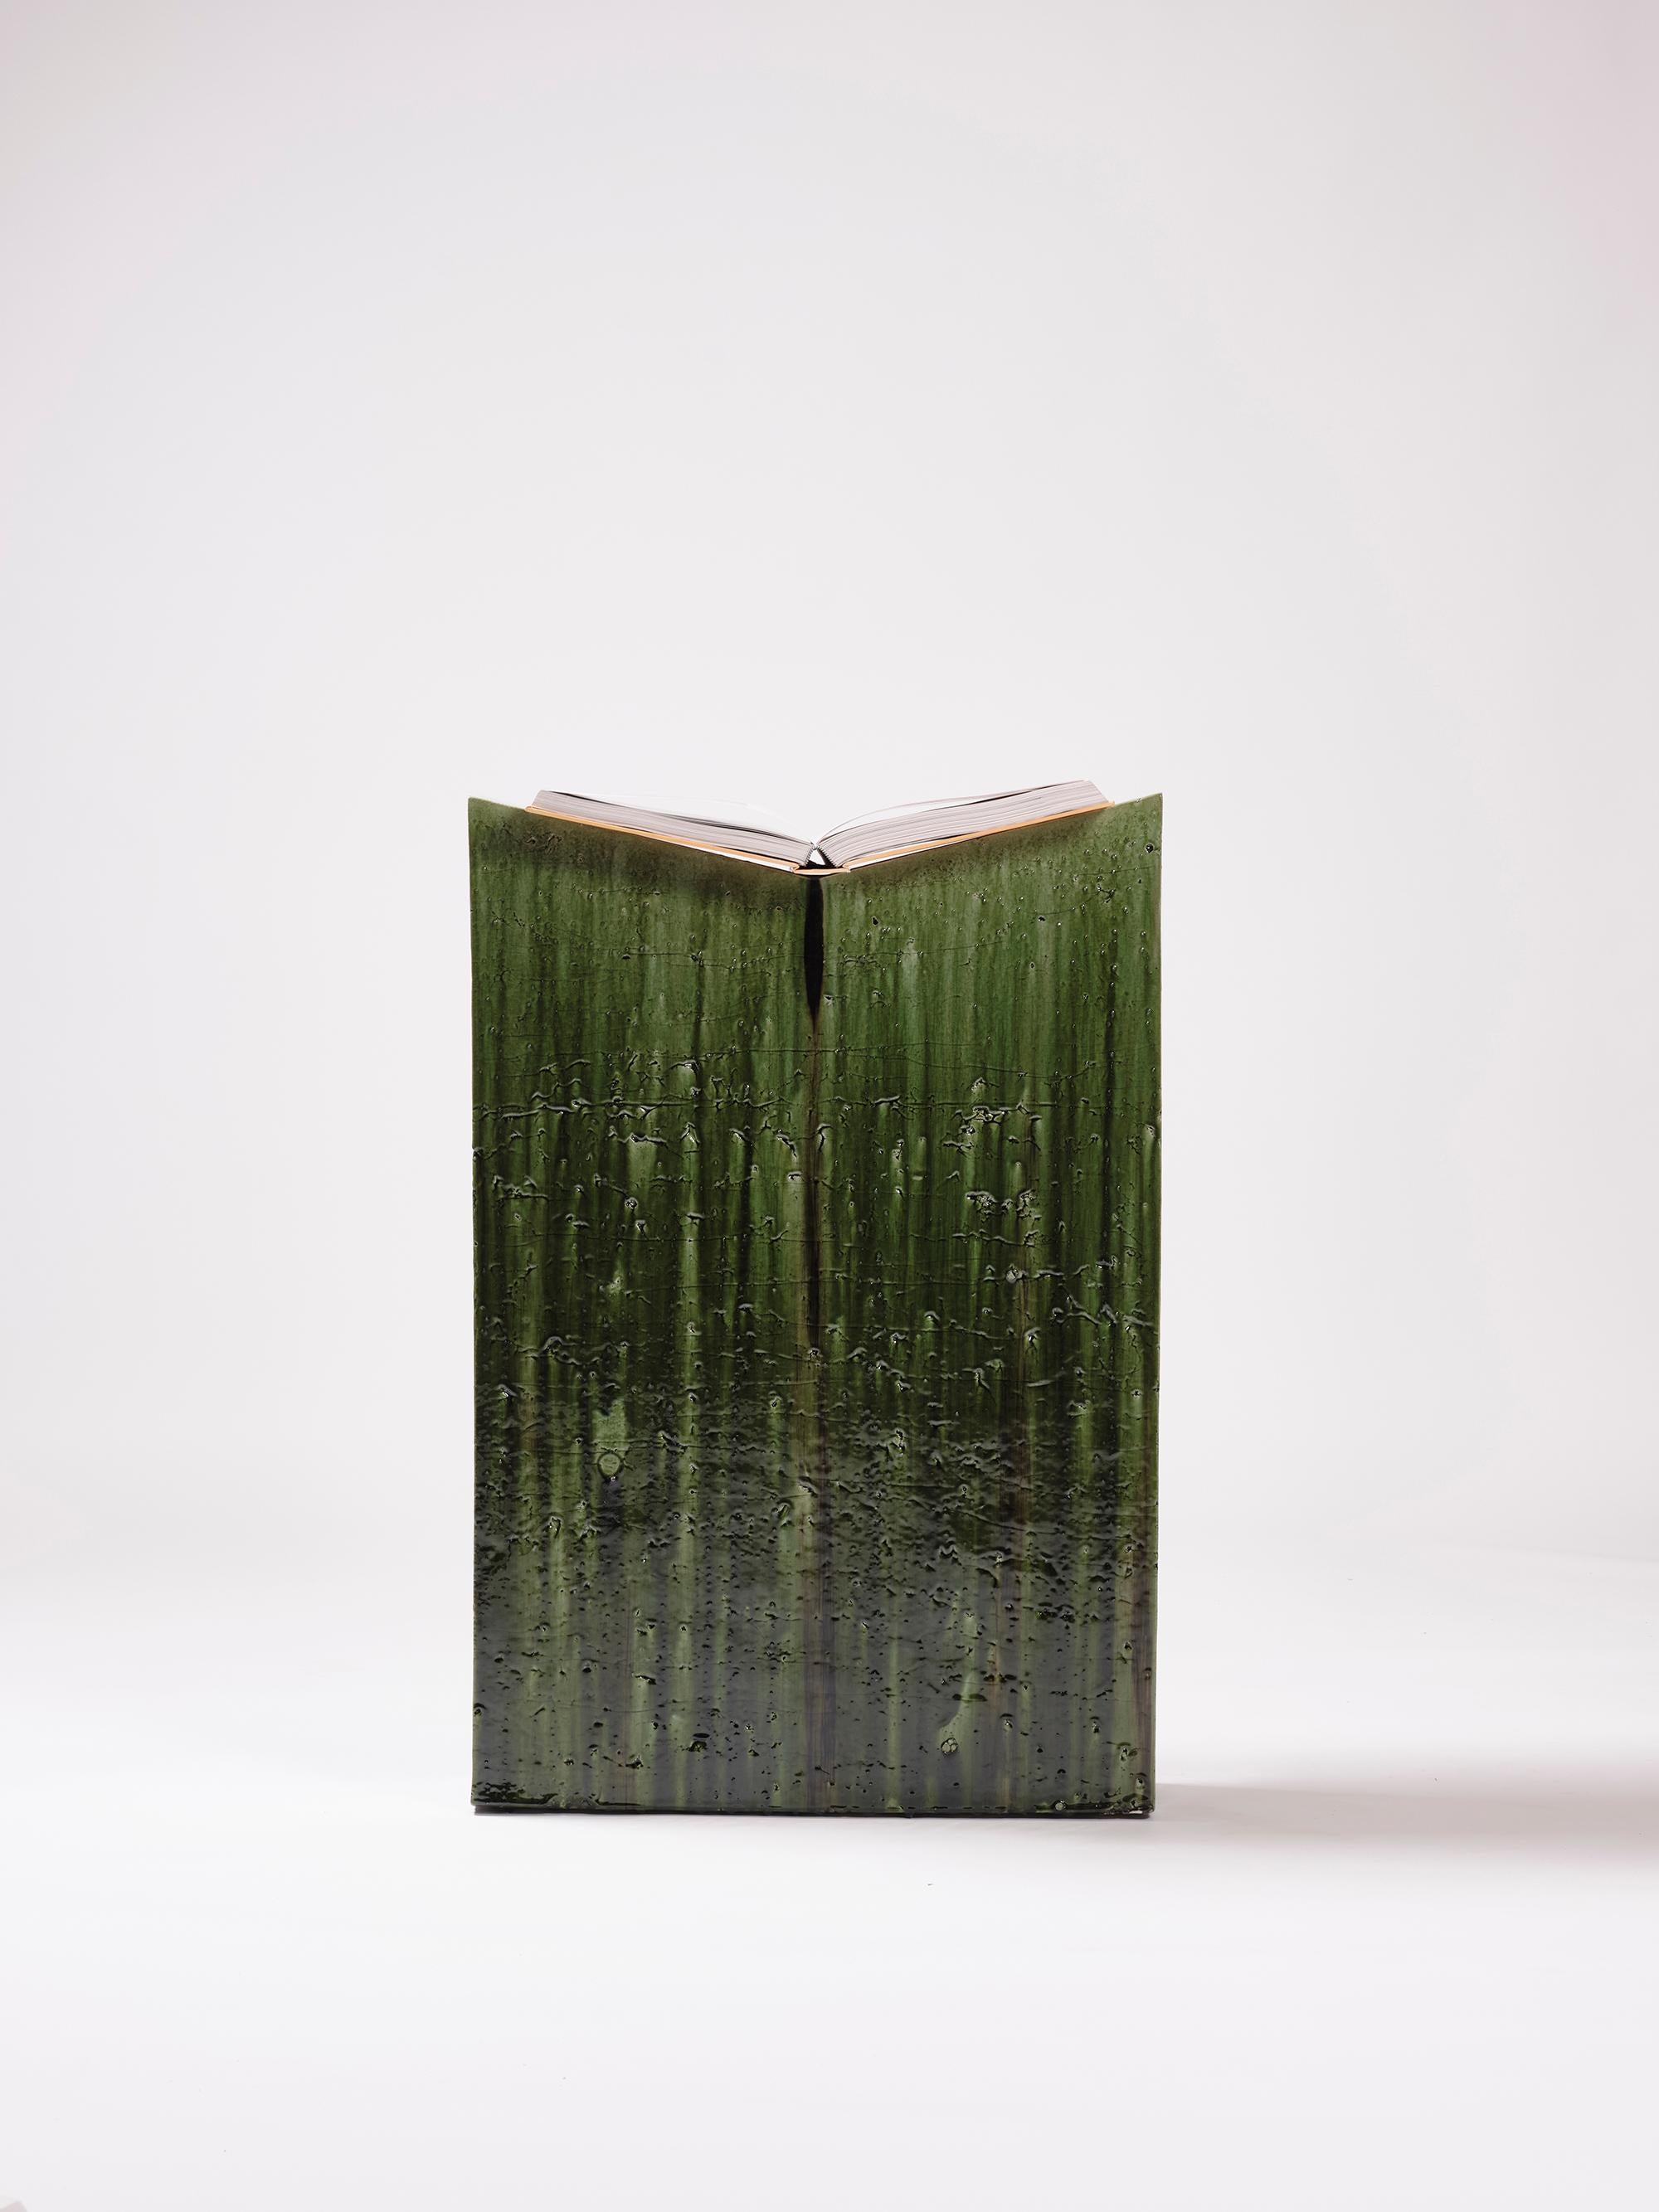 Spanish Contemporary Ceramic Lectern Reading Desk Glazed Earthenware Deep Green modern For Sale